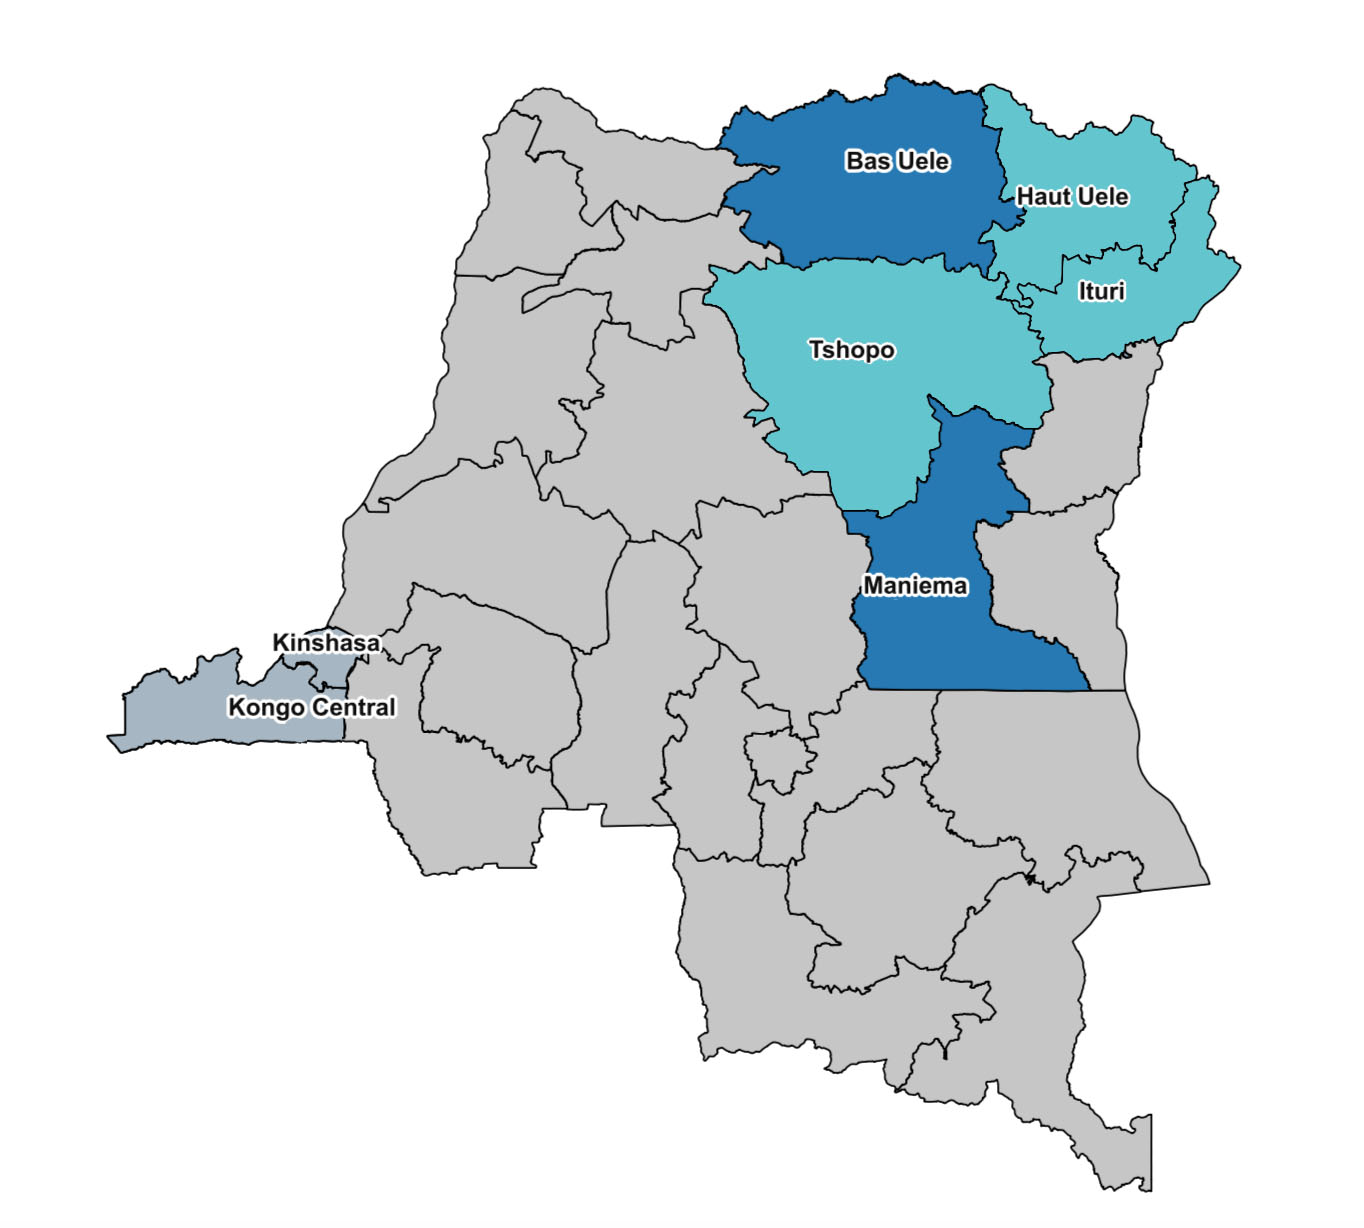 Nets will be distributed in three waves: Kinshasa, Kongo Centrale (Q2/Q3 2020); Tshopo, Haut Uele, Ituri (Q3/Q4 2020); Maniema, Bas Uele (Q1 2021)